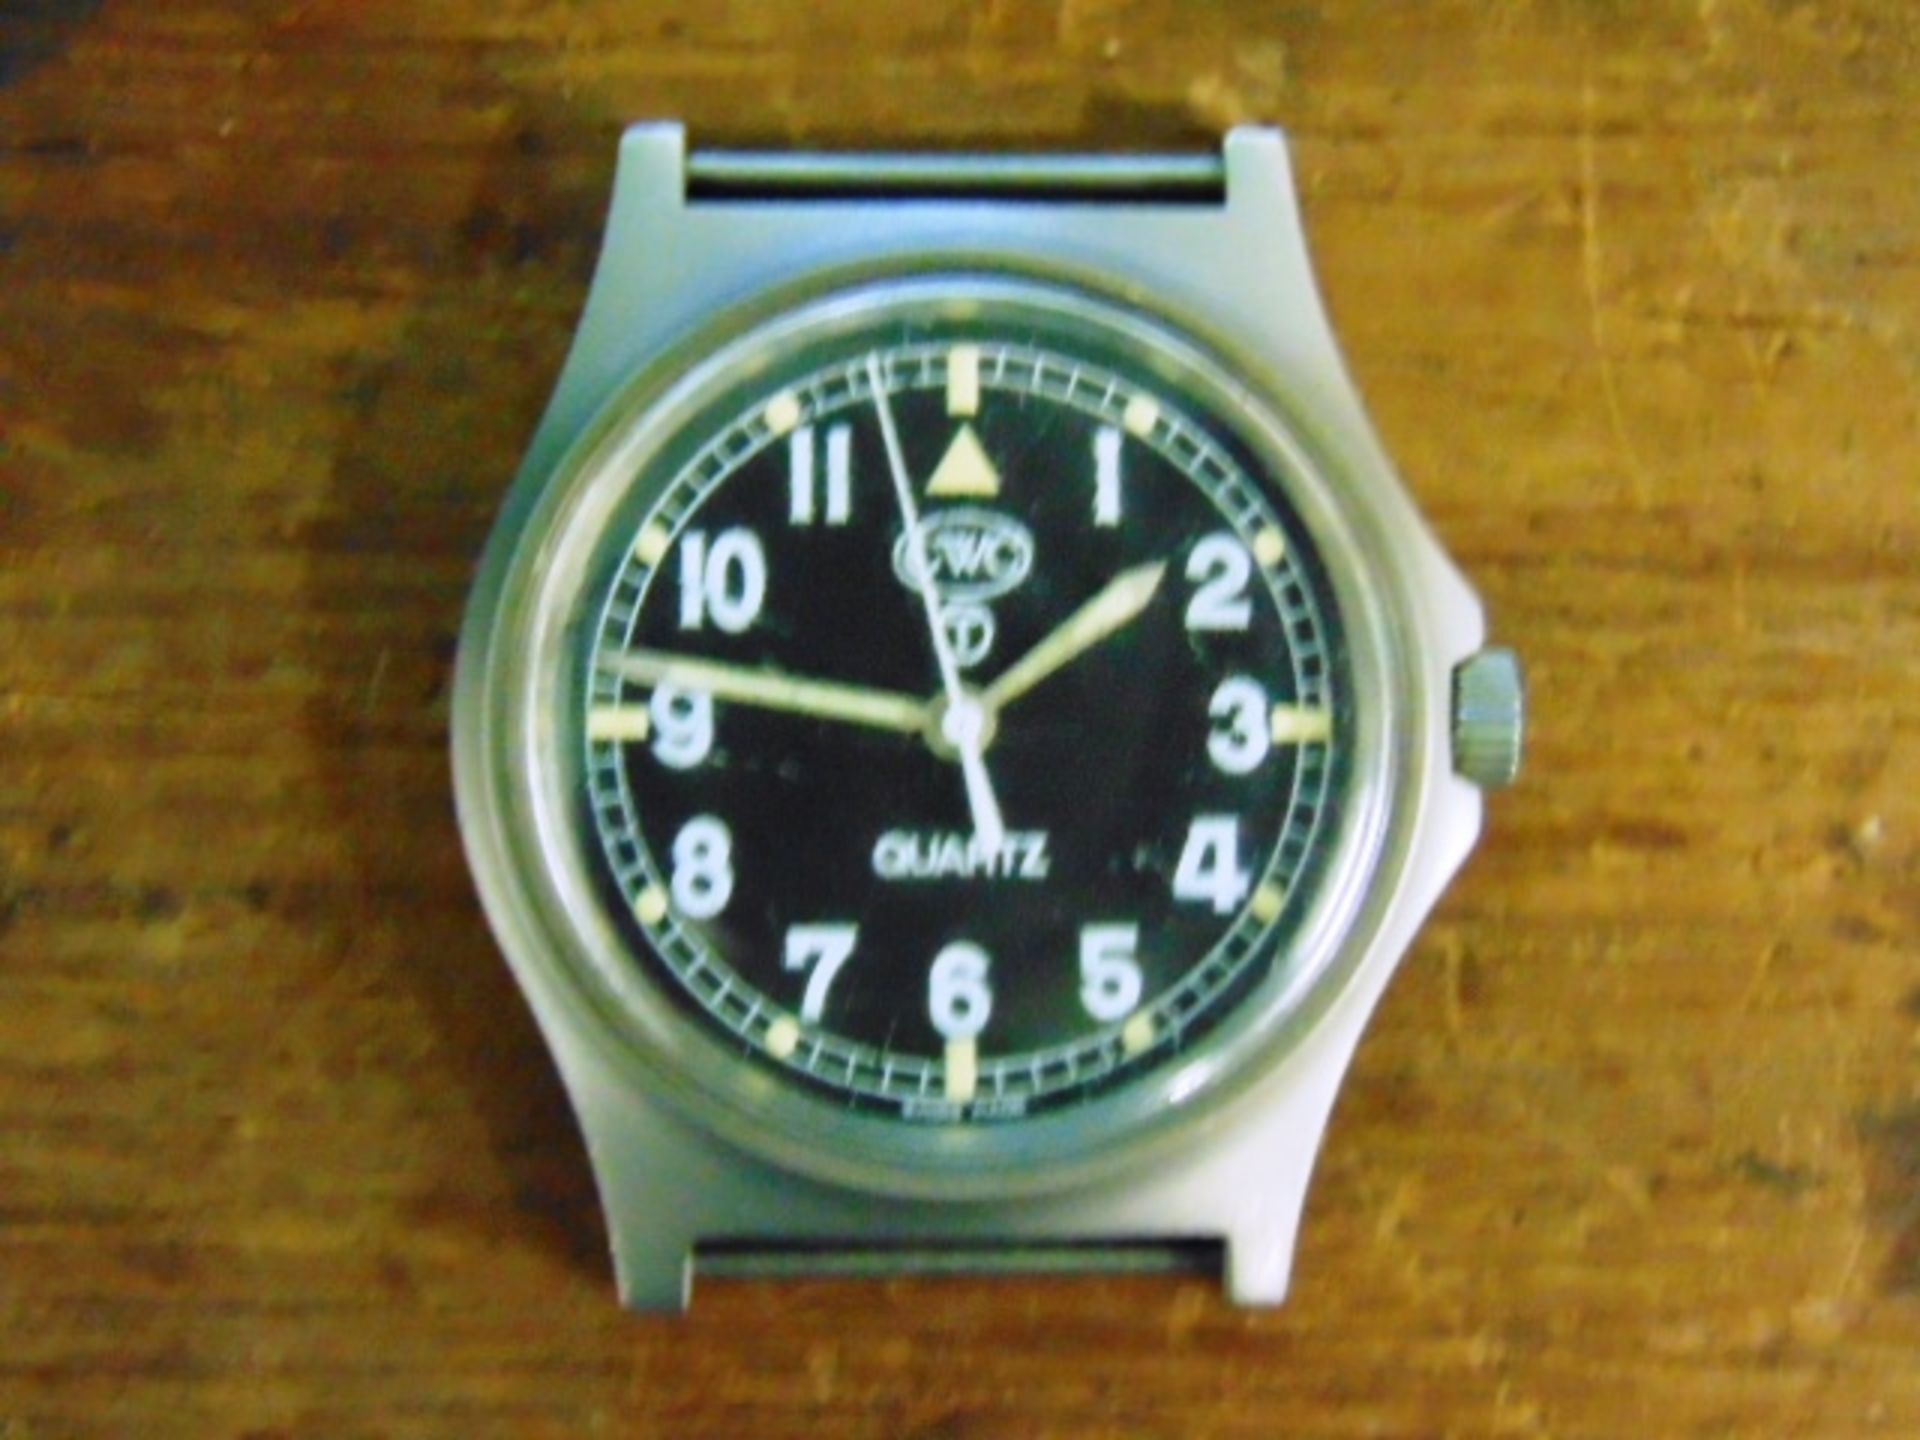 Genuine British Army, CWC quartz wrist watch - Image 4 of 6